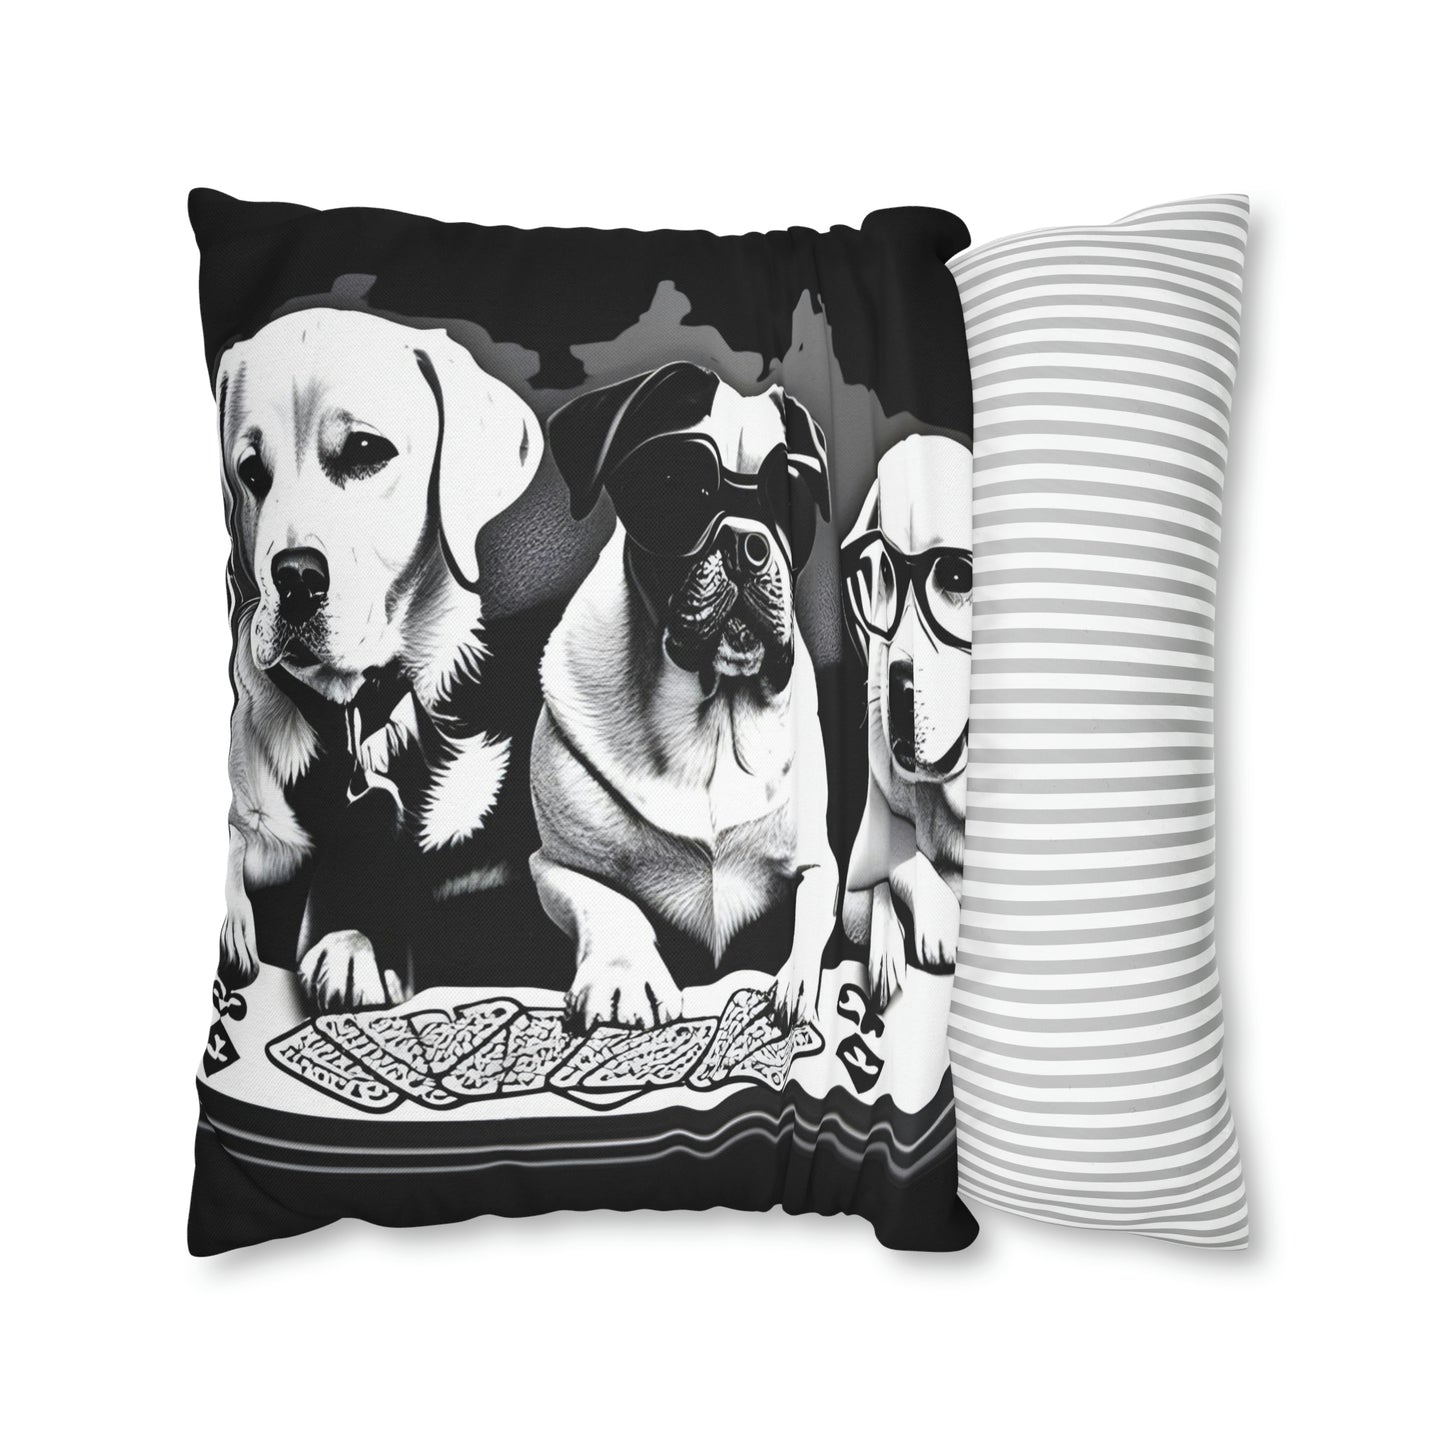 Black Scripture Spun Polyester Square Pillow | Spun Polyester Square Pillow Case | Dogs Playing card | Dog Décor pillow